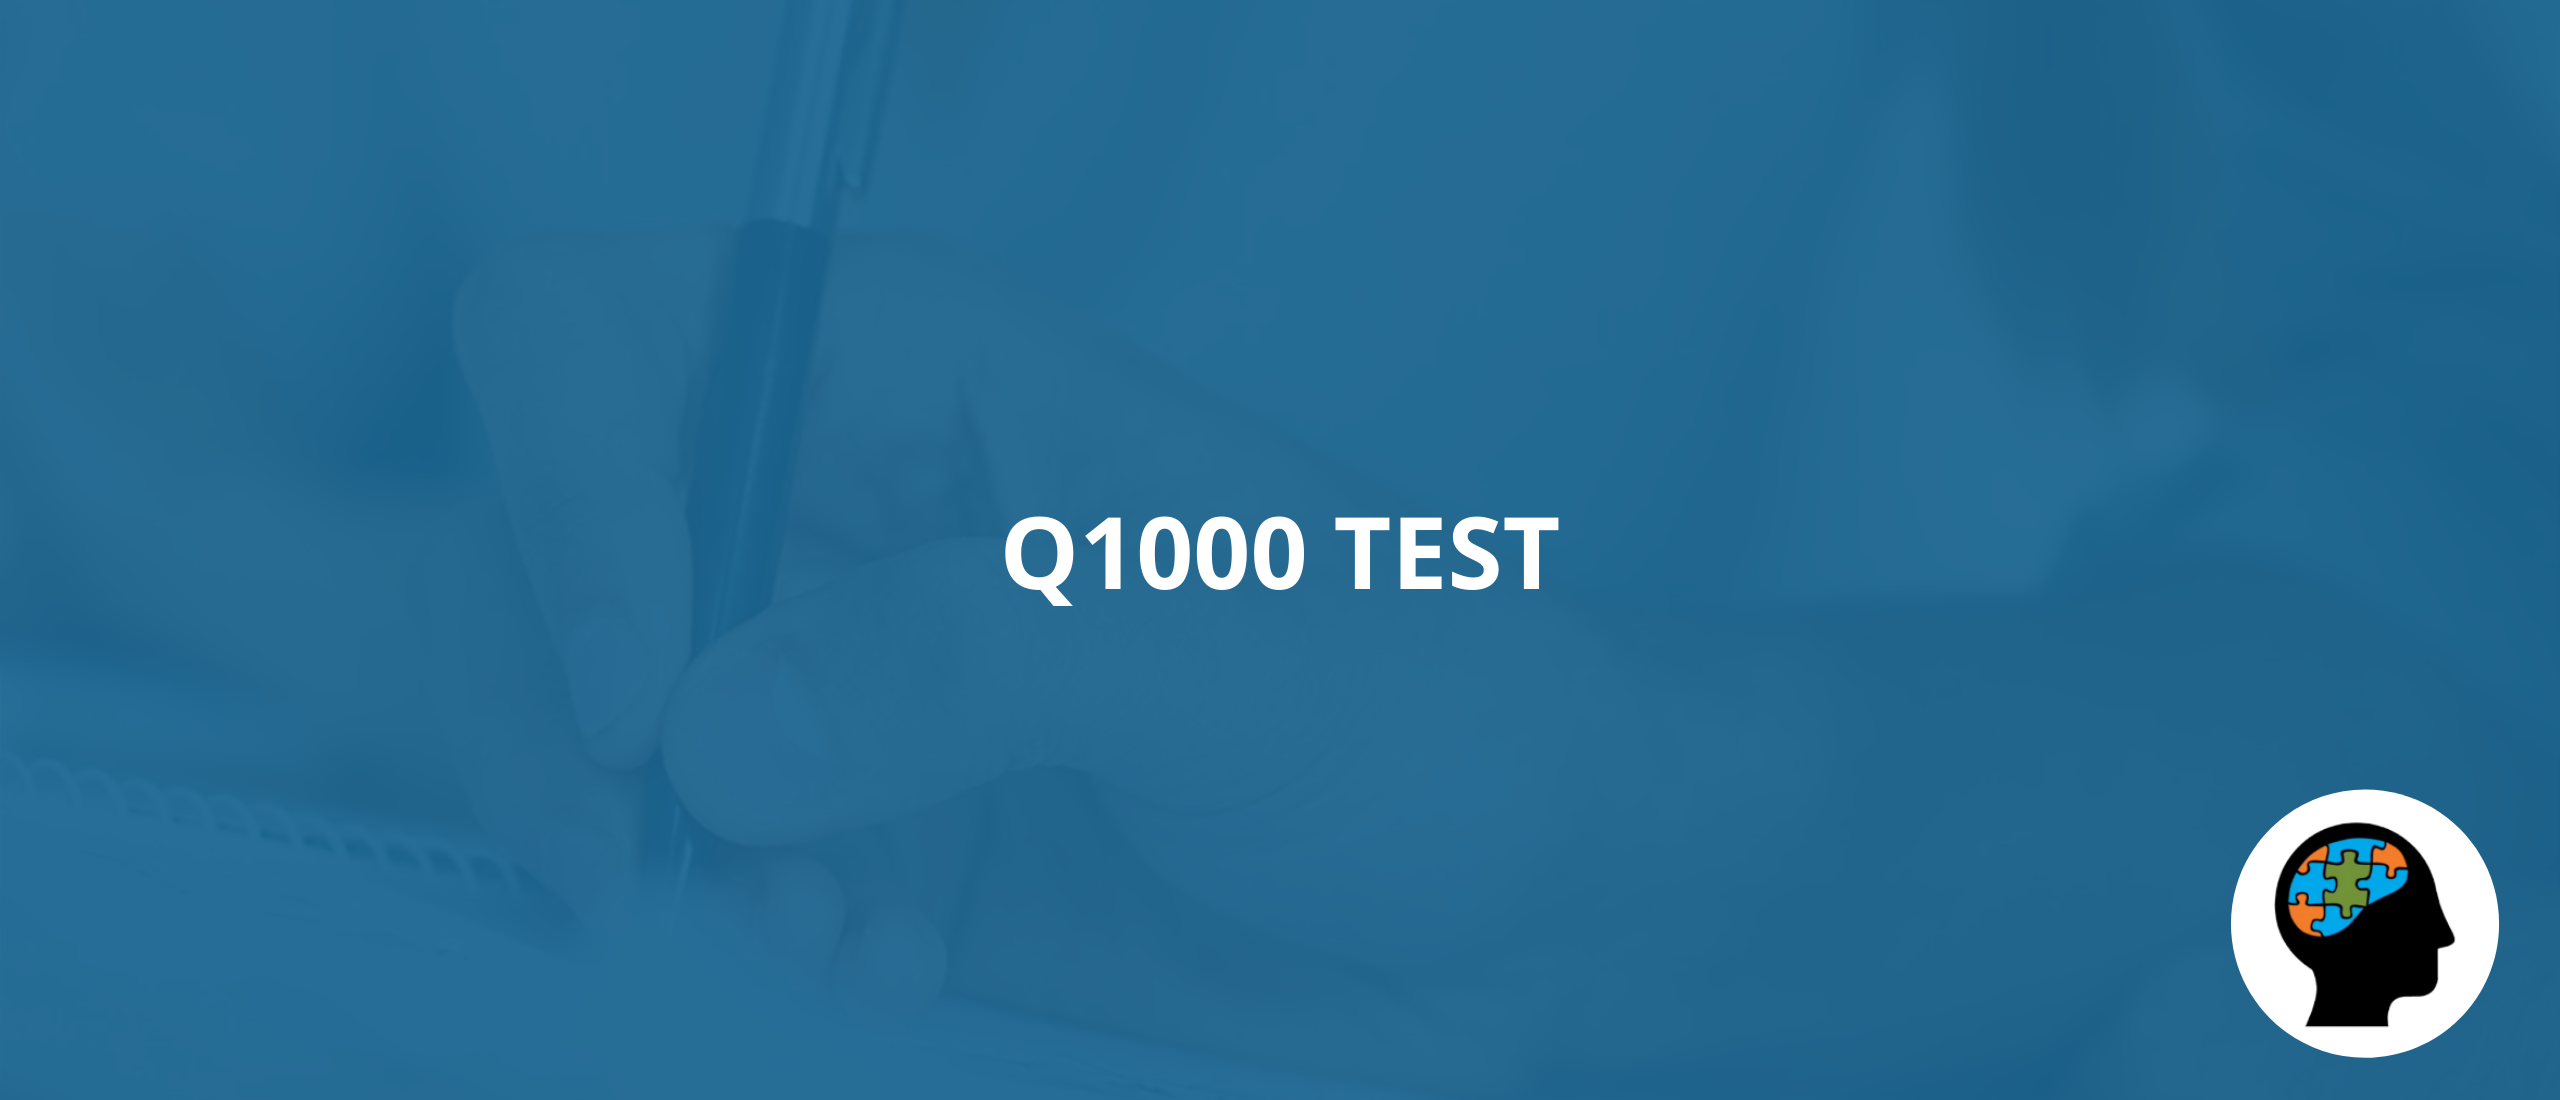 Q1000 test